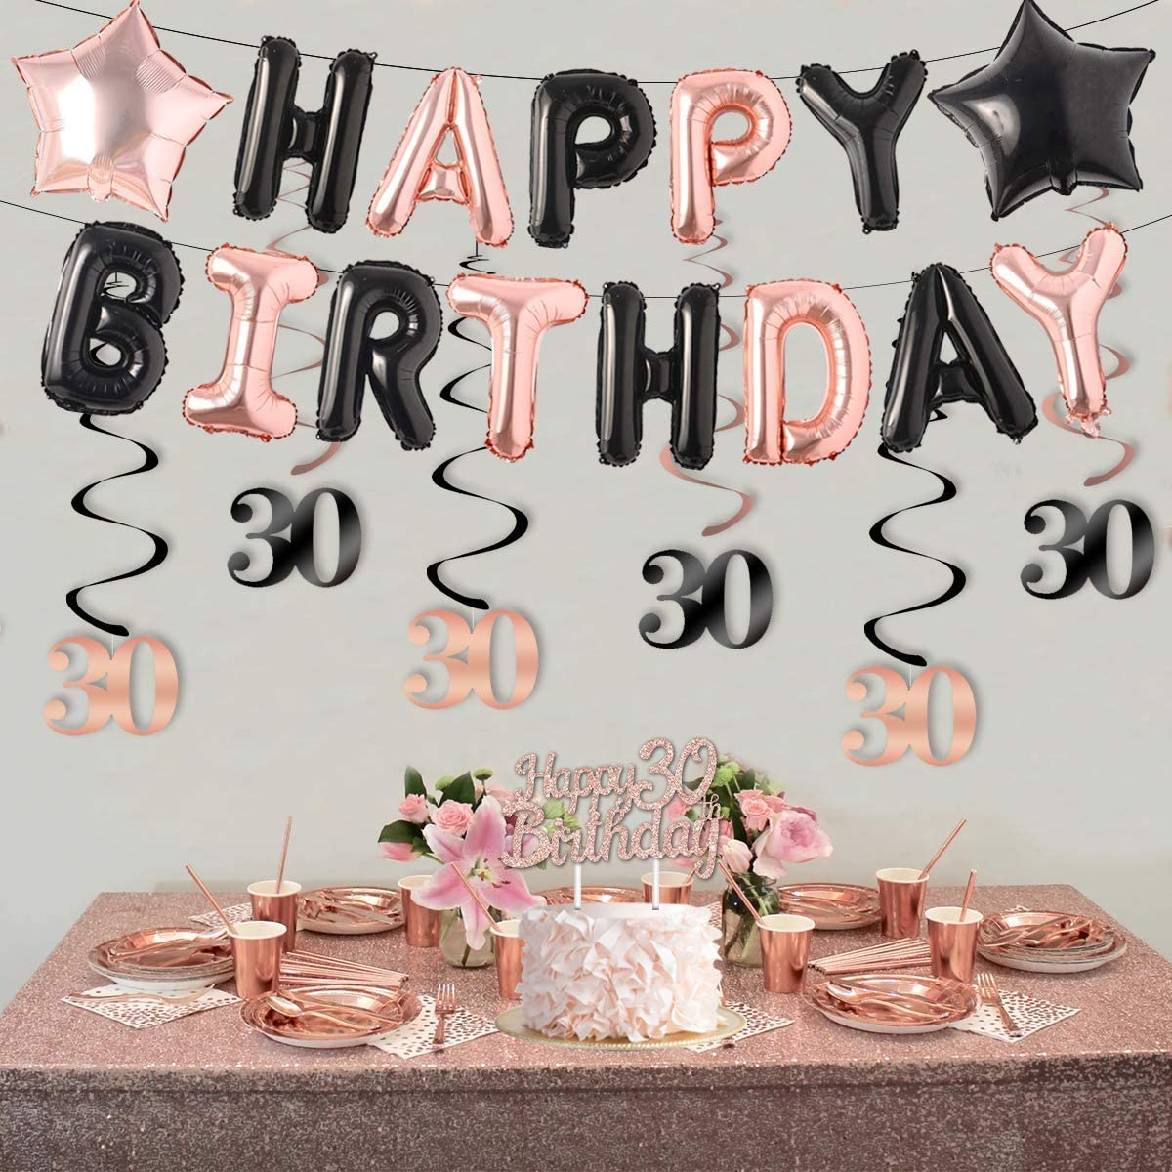 Party Decoration Balloon - 16 Inch 30cm - Happy Birthday - Black & Rose Set